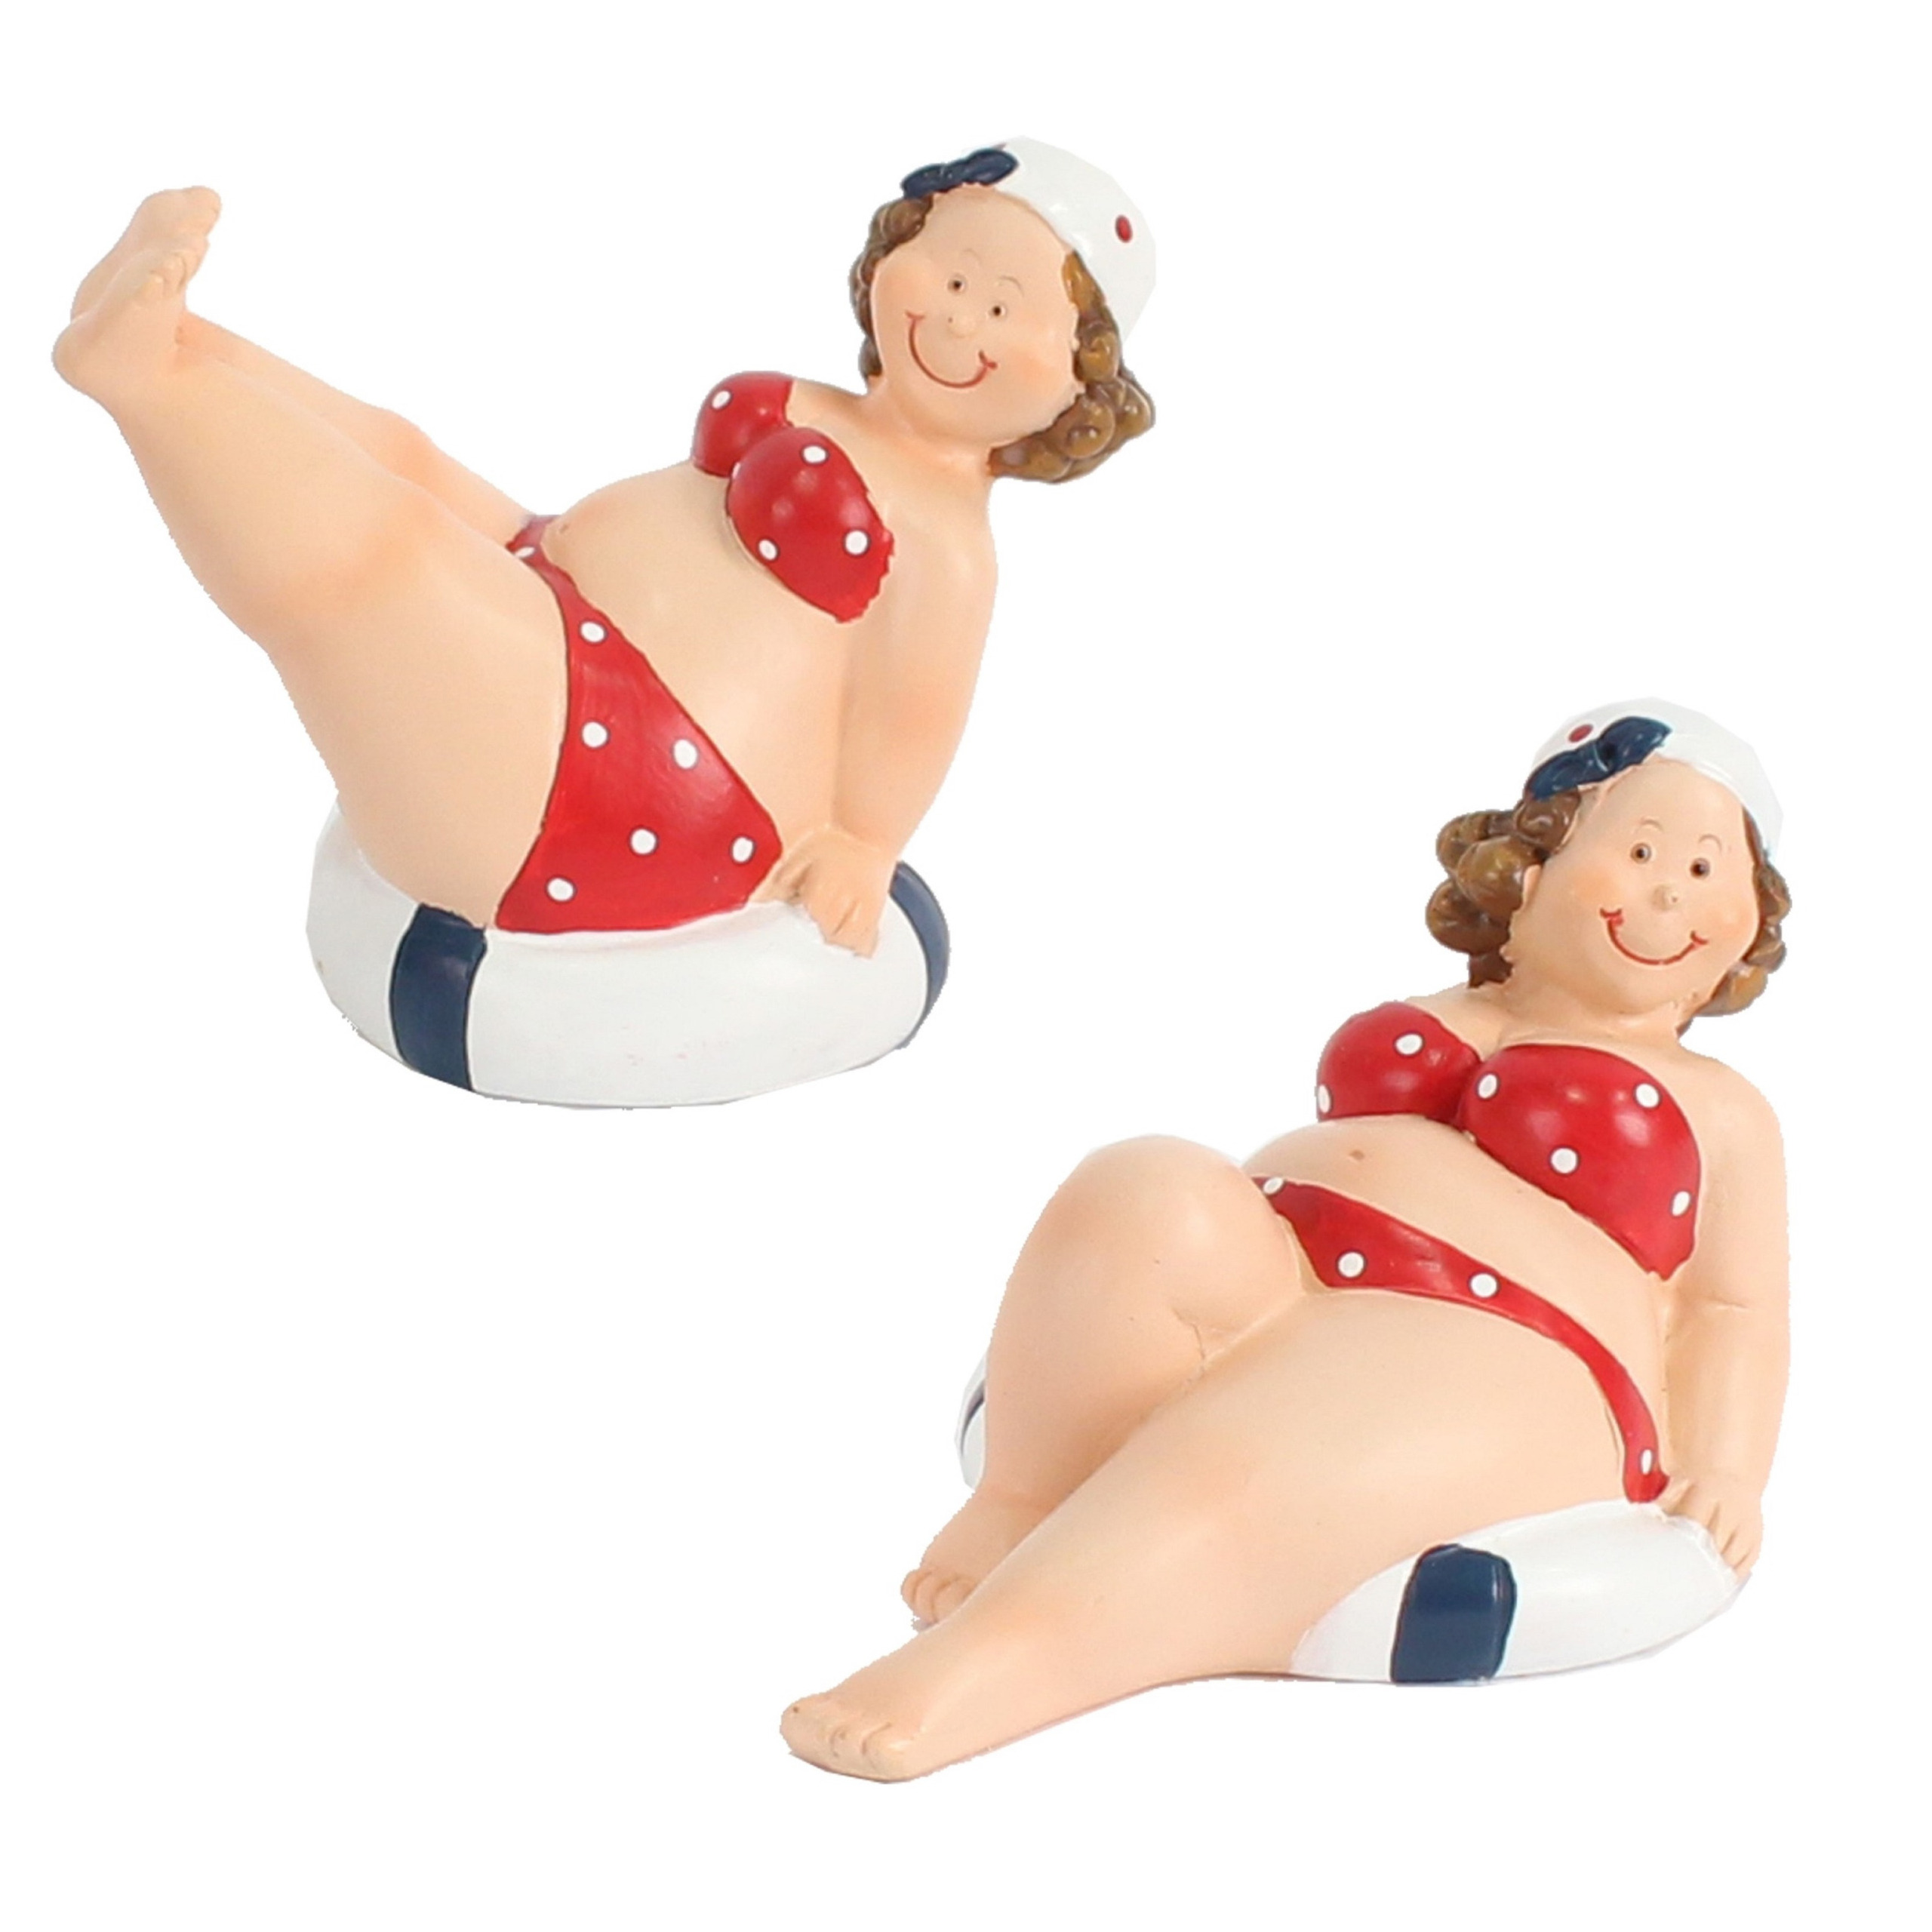 Woonkamer decoratie beeldjes set van 2 dikke dames rood badpak 10 cm